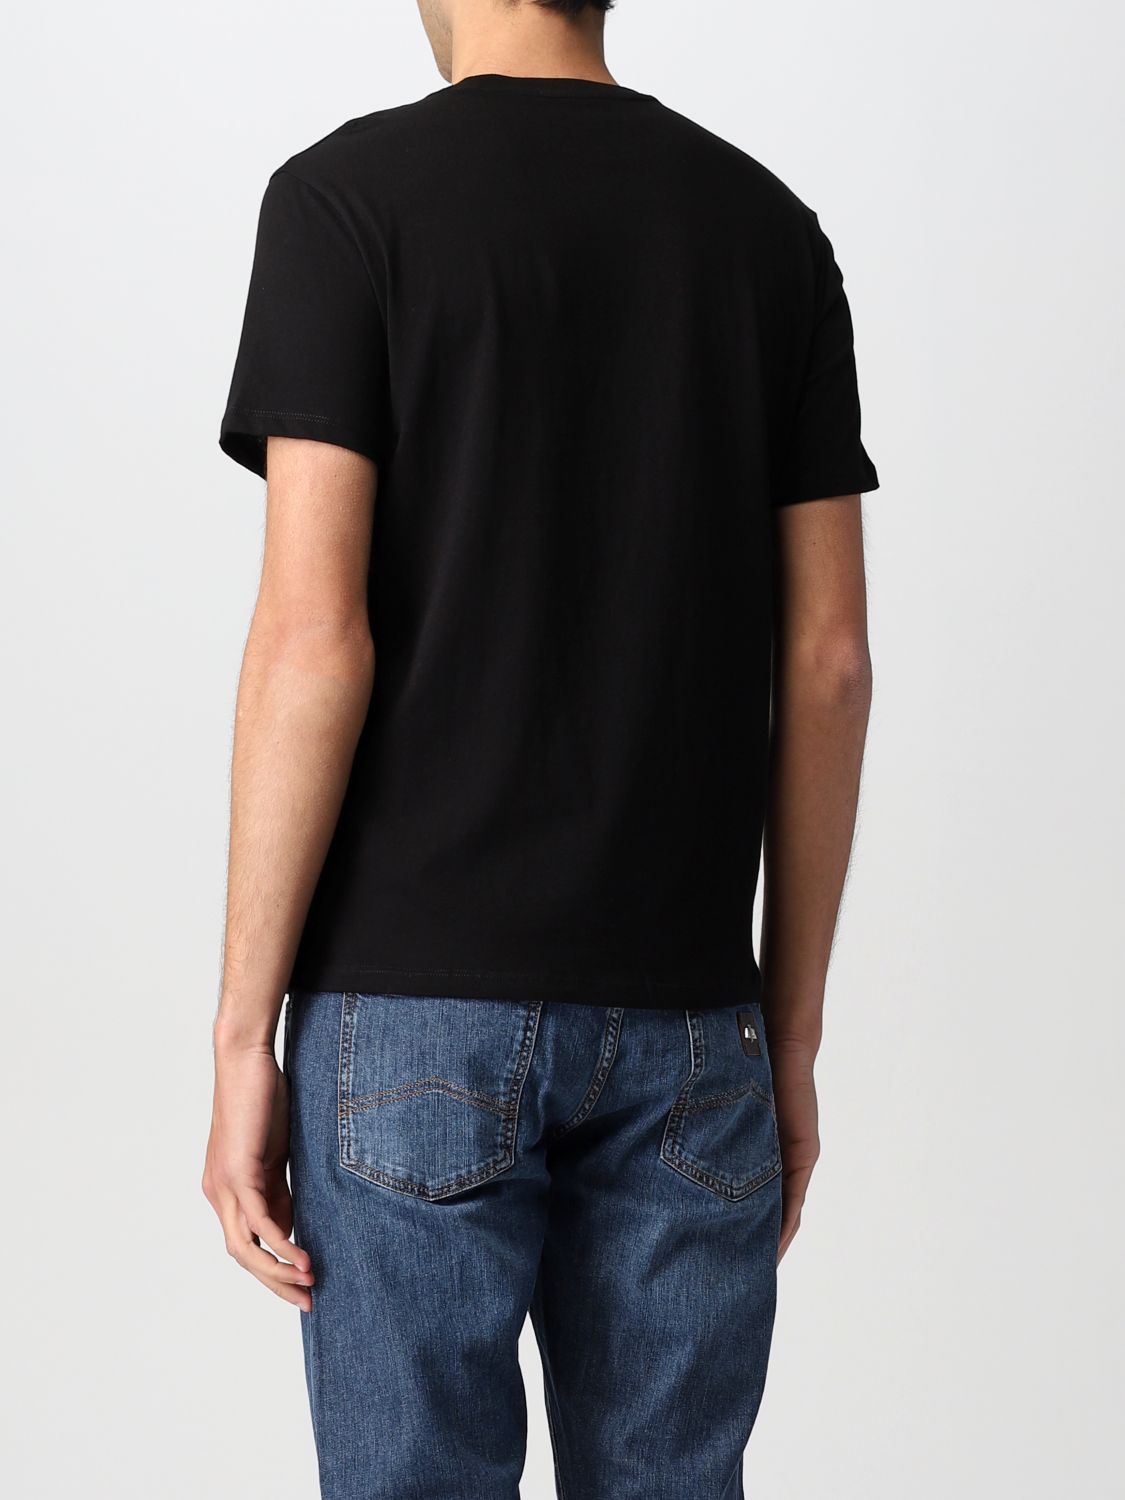 ARMANI EXCHANGE: cotton t-shirt with logo - Black | Armani Exchange t ...